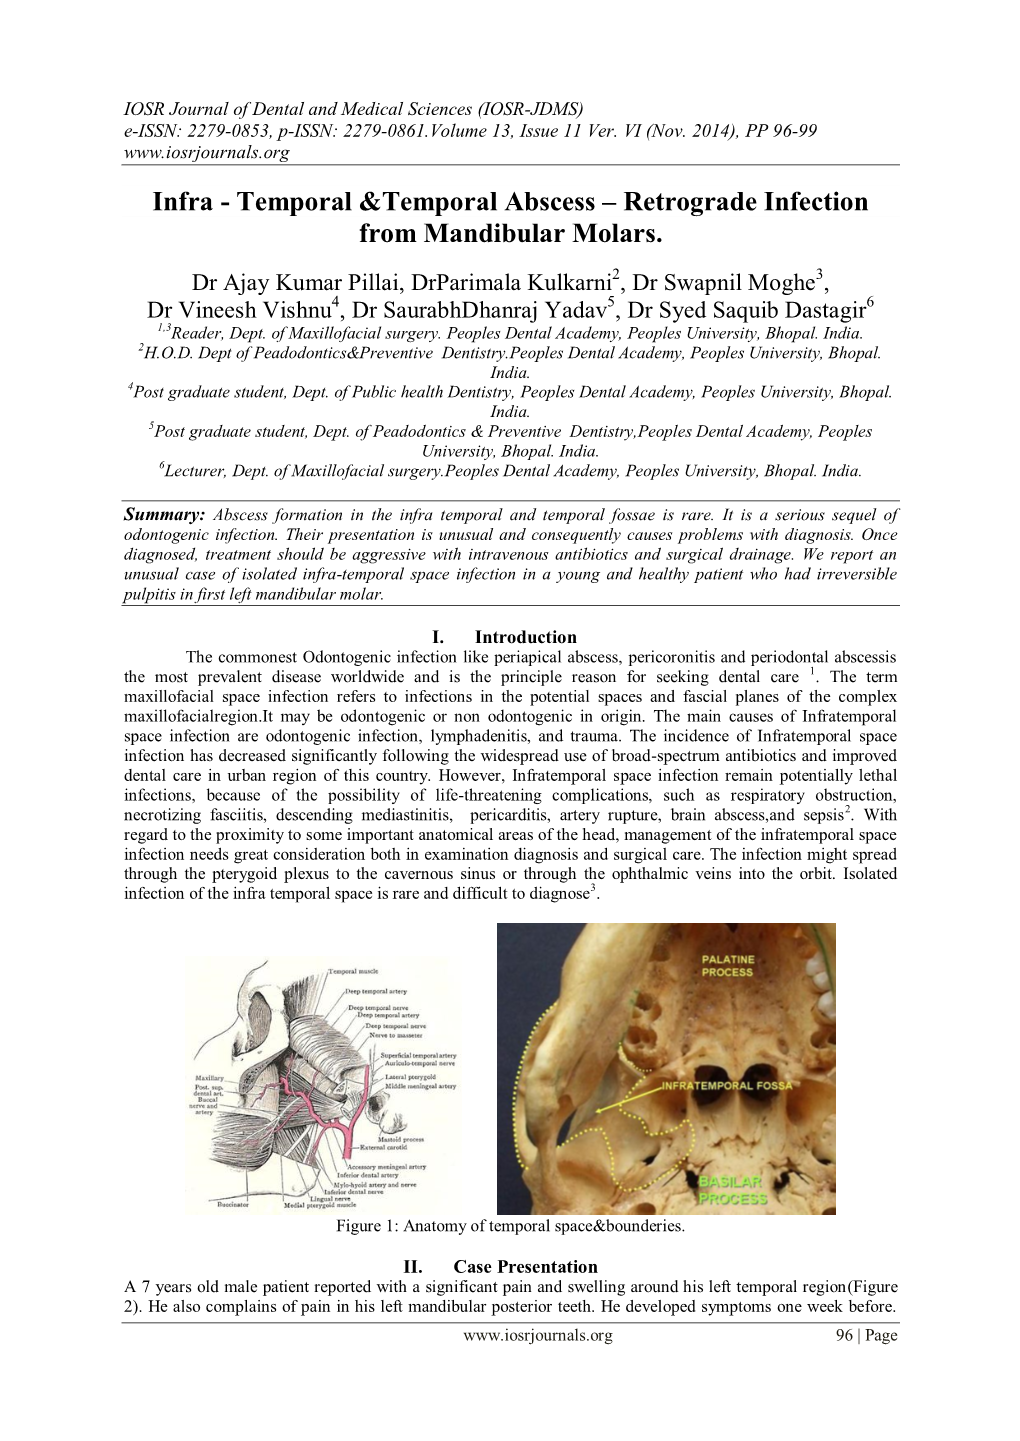 Infra - Temporal &Temporal Abscess – Retrograde Infection from Mandibular Molars